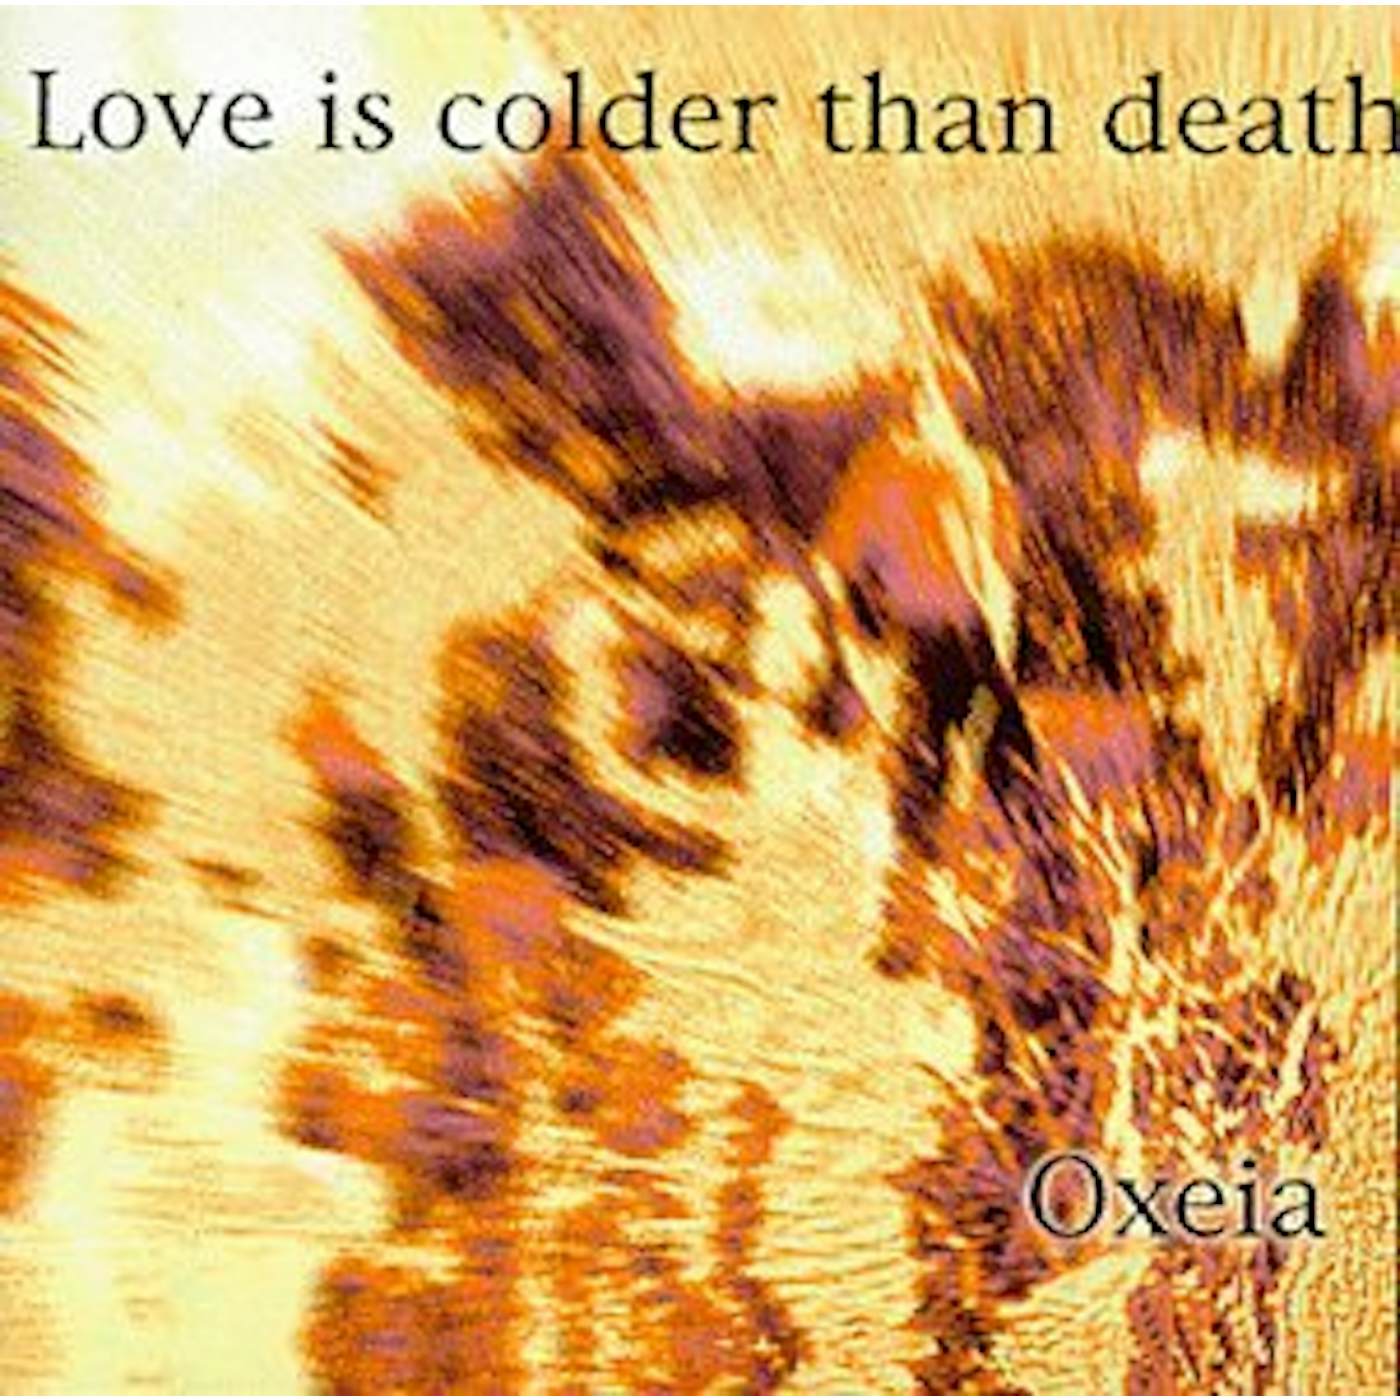 Love Is Colder Than Death OXIEA CD